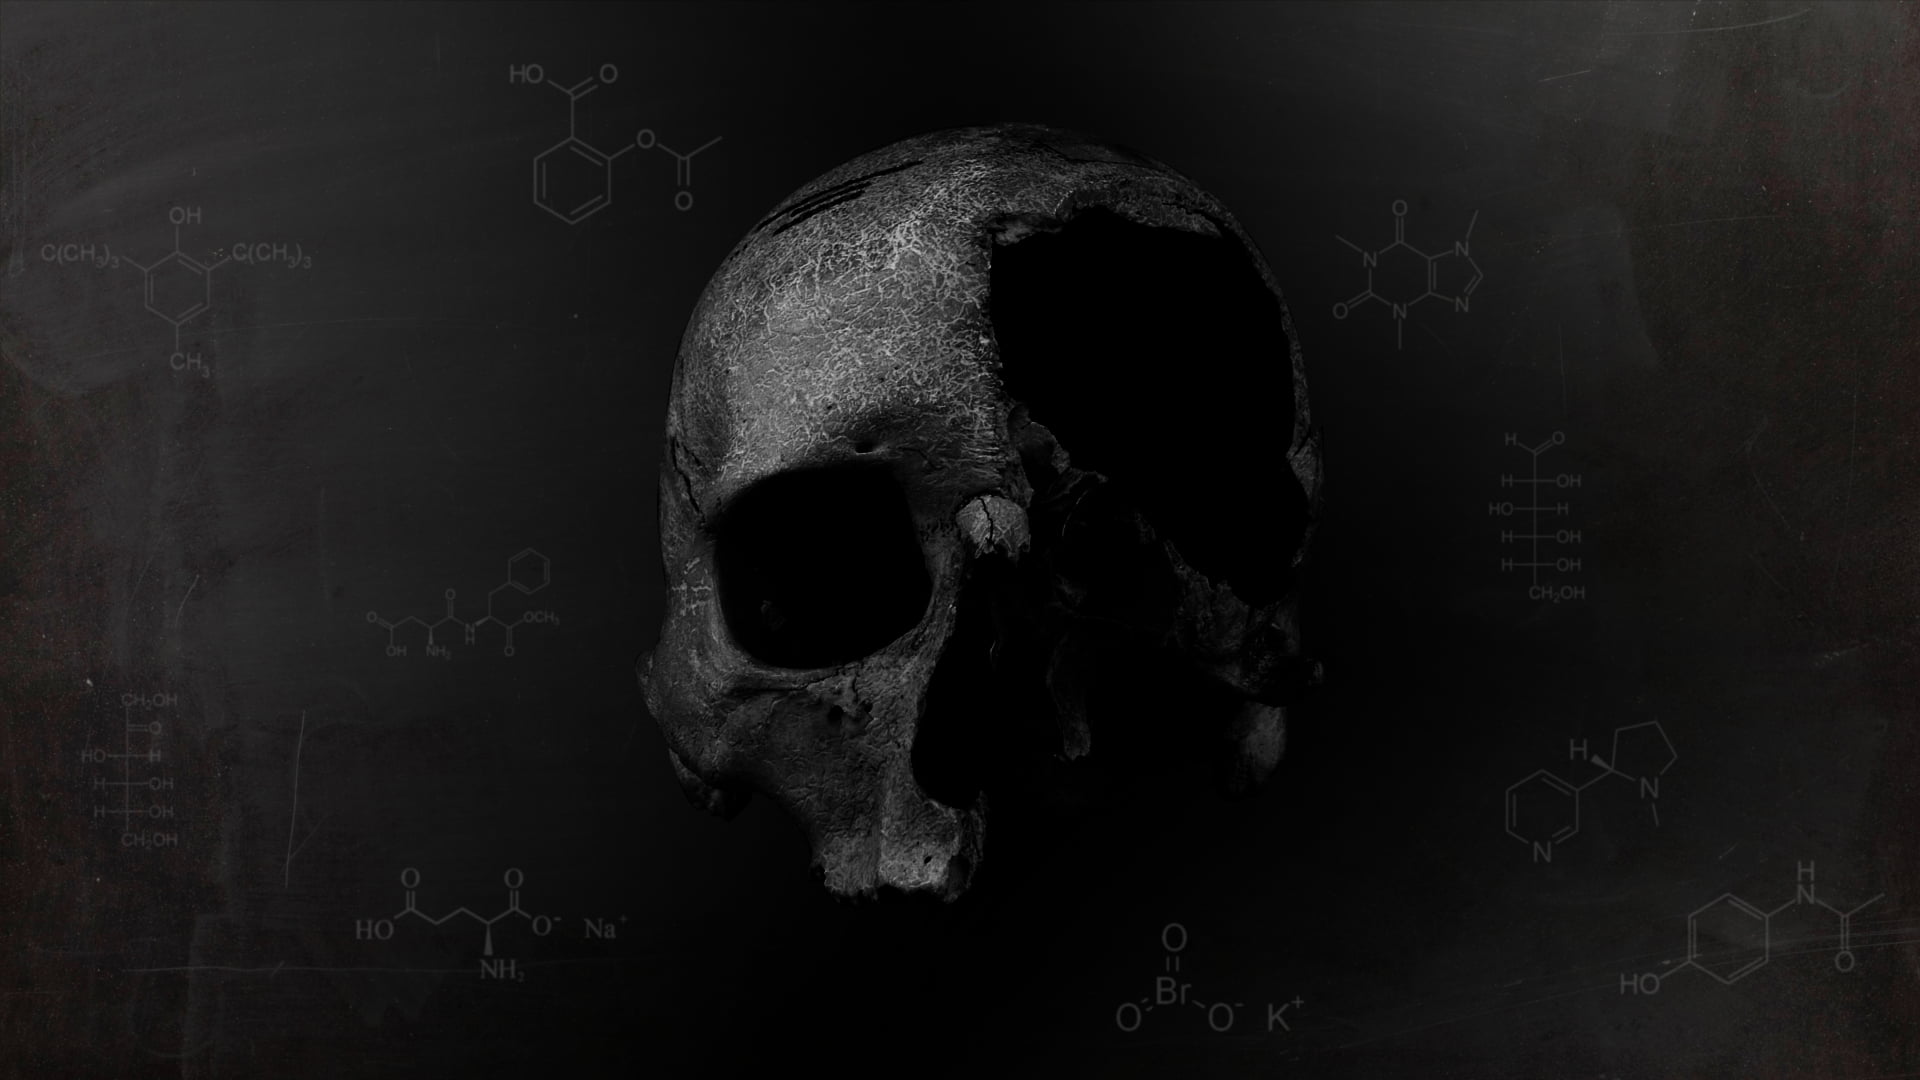 gray and black skull poster, gray skull wallpaper, chemistry